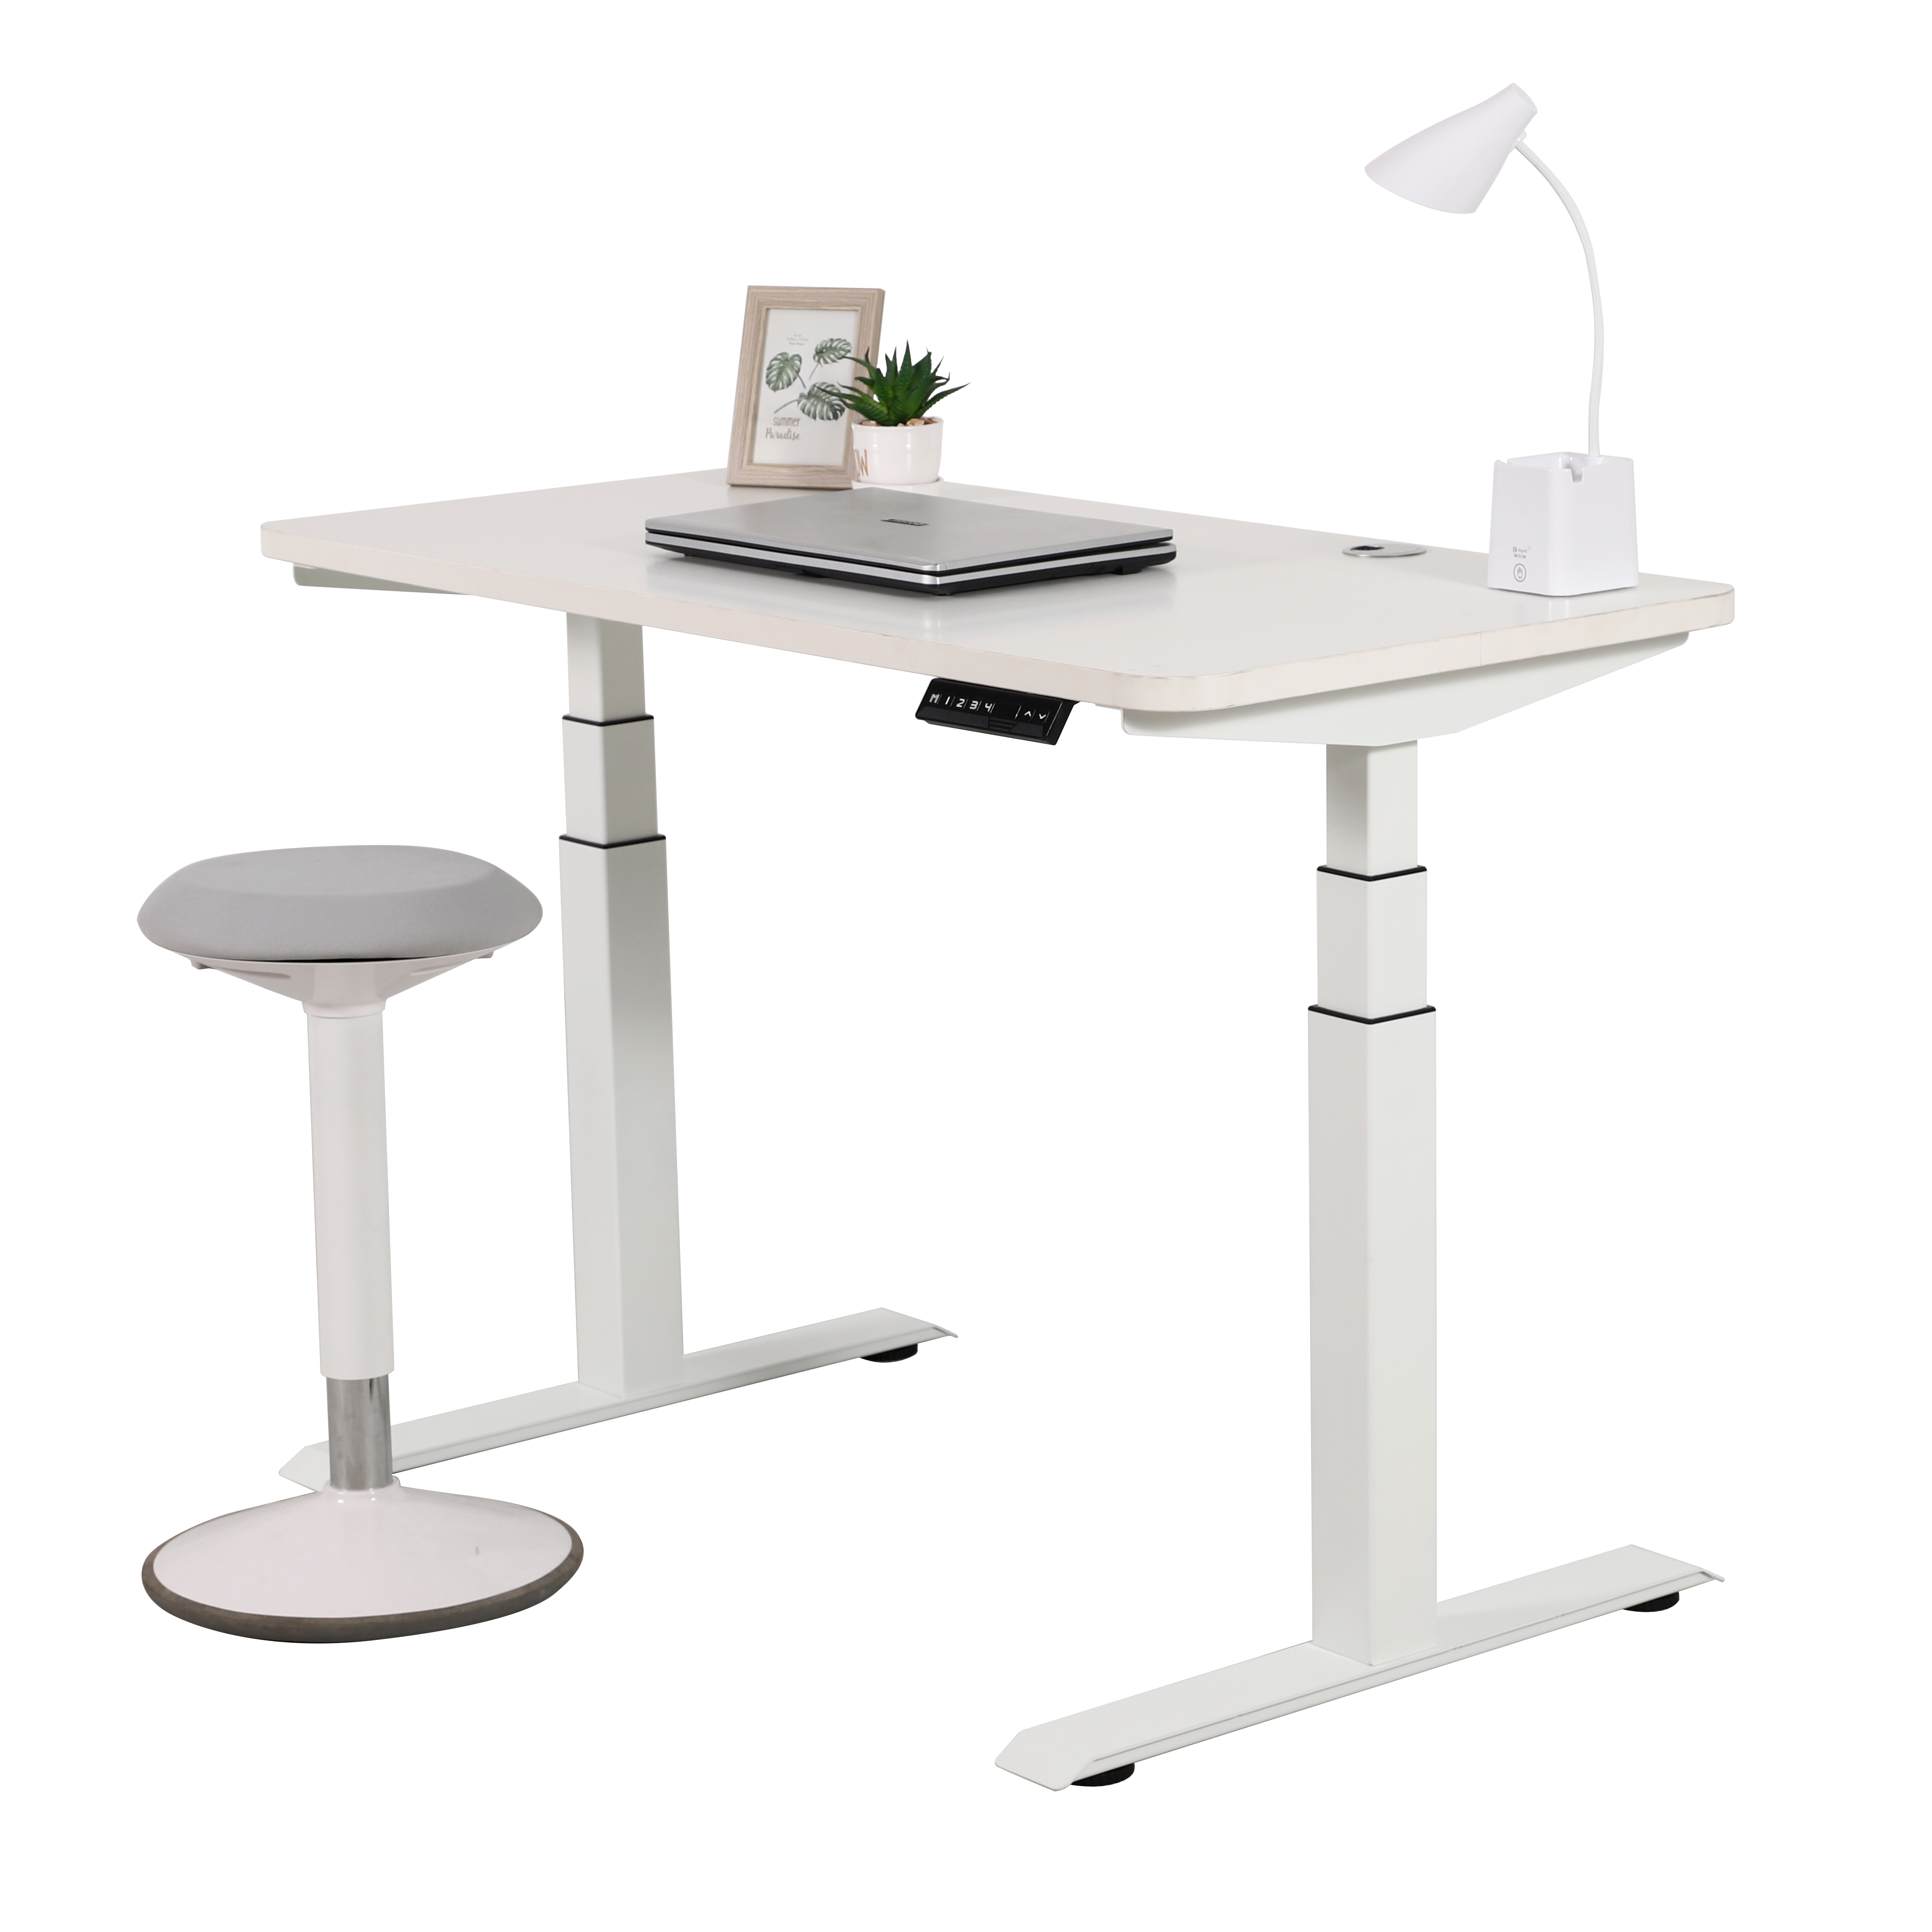 NT33-2B2 Standing electric desk adjustable stand up desk